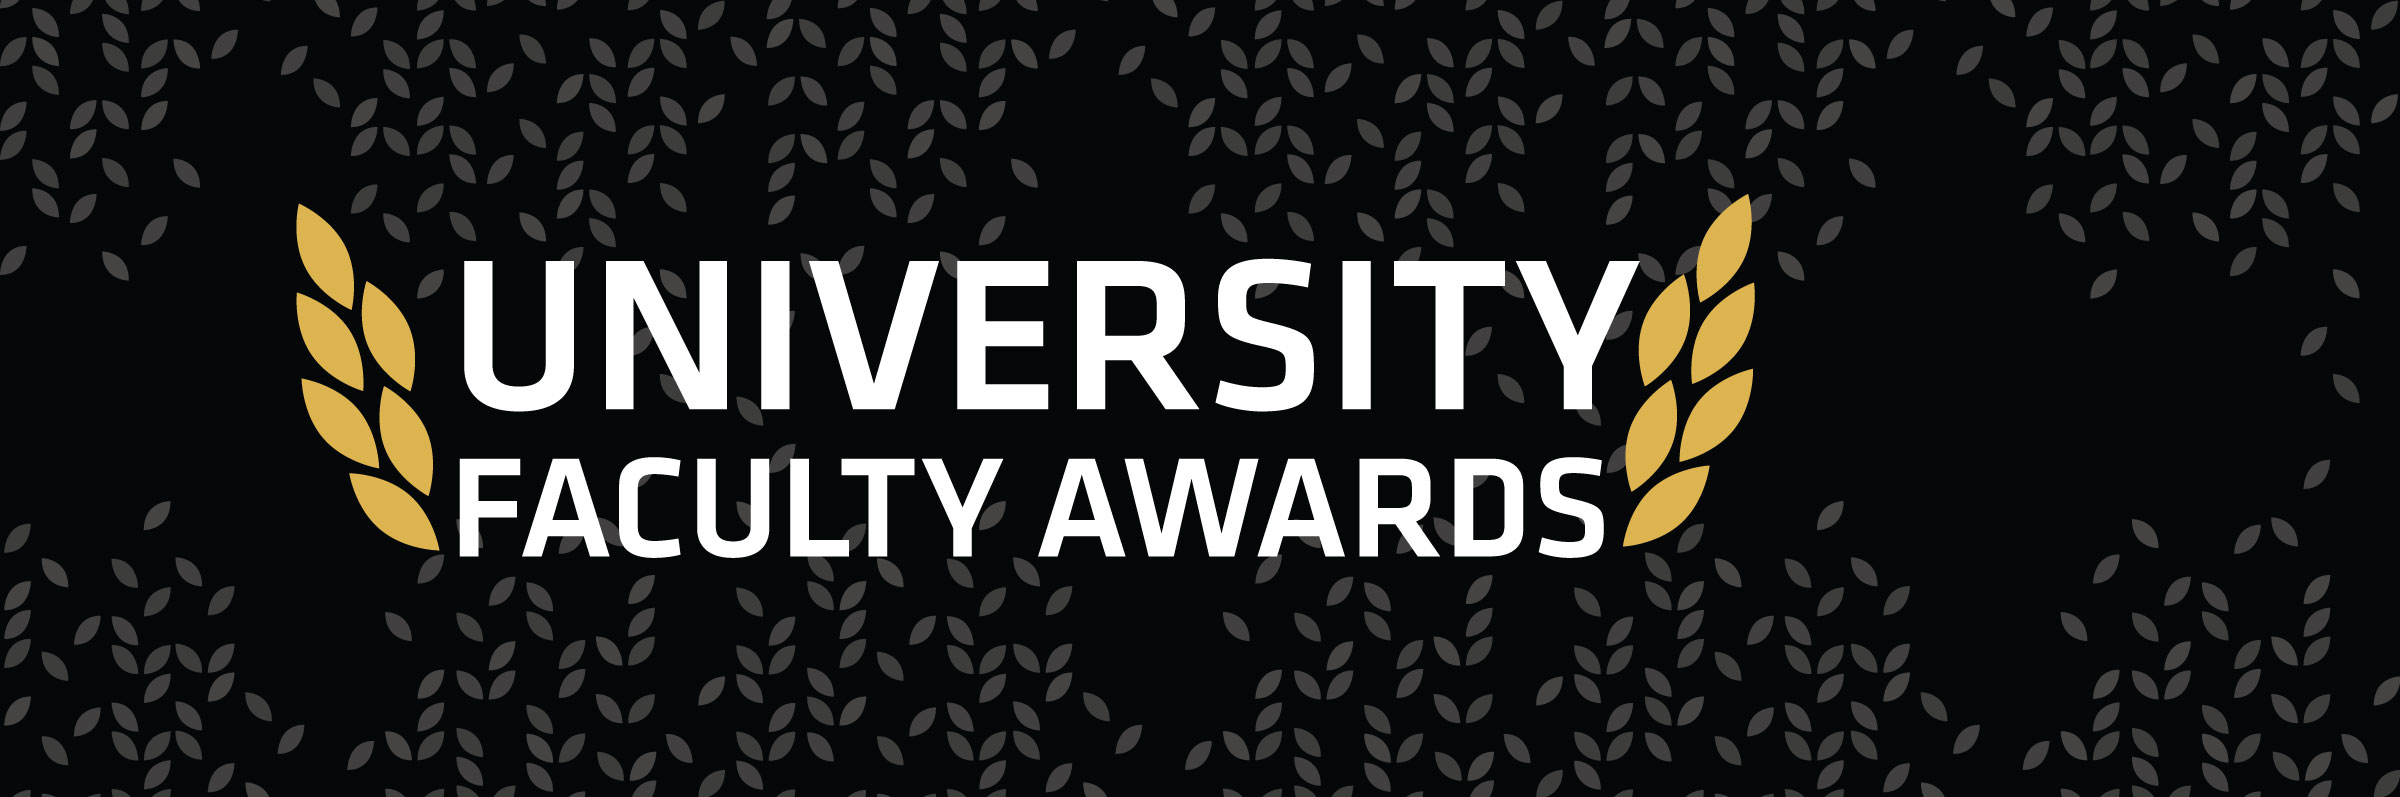 University Faculty Awards banner